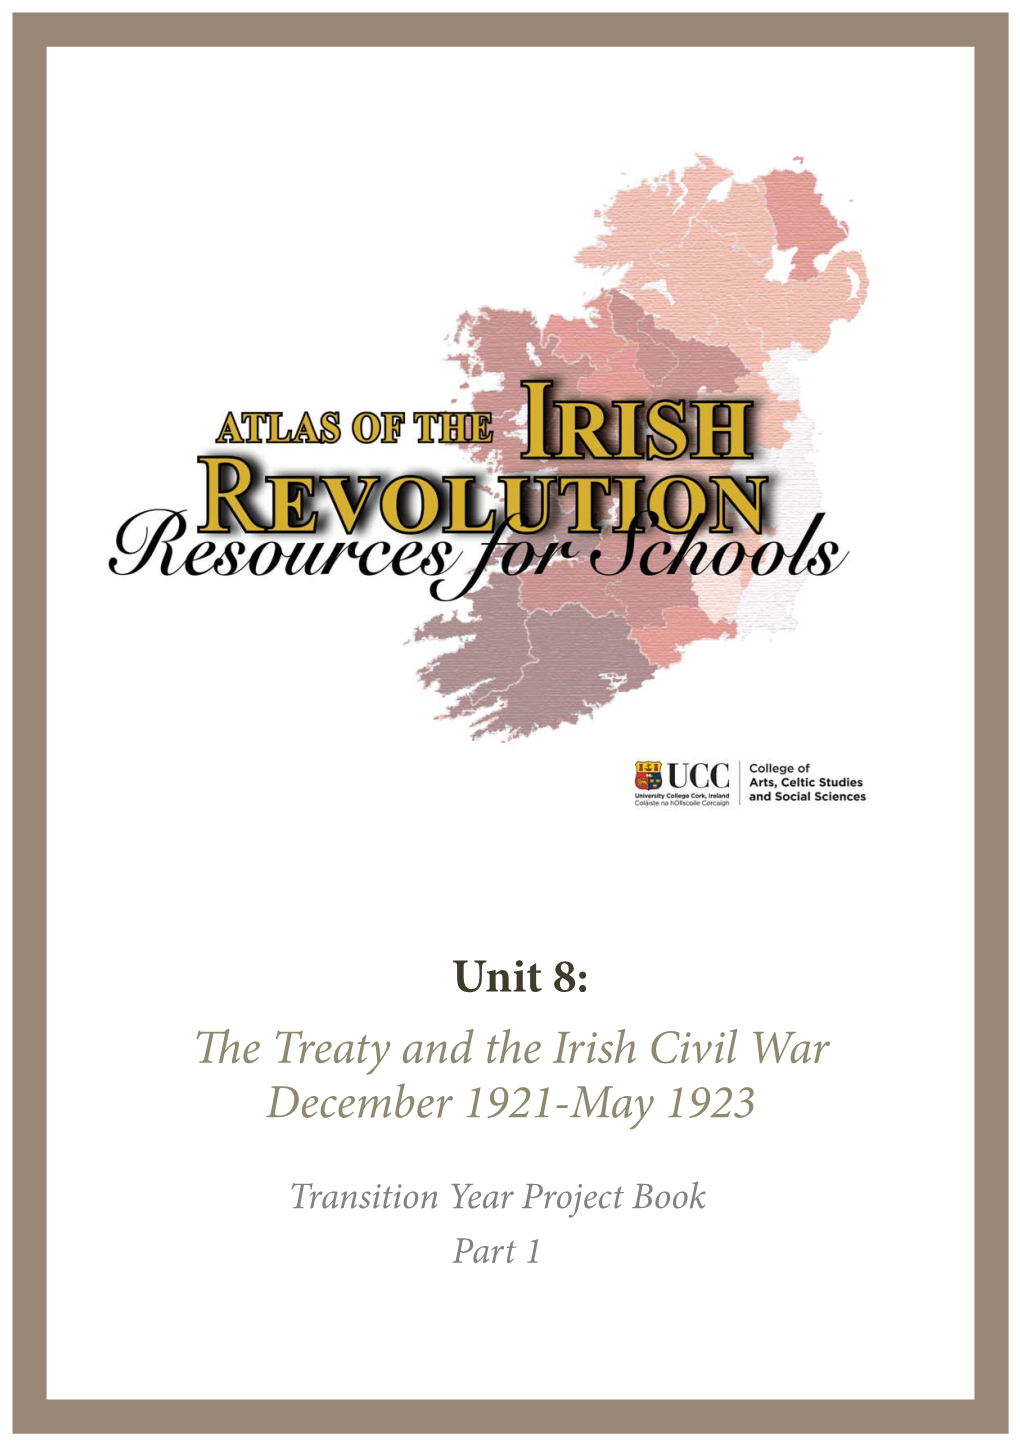 The Treaty and the Irish Civil War December 1921-May 1923